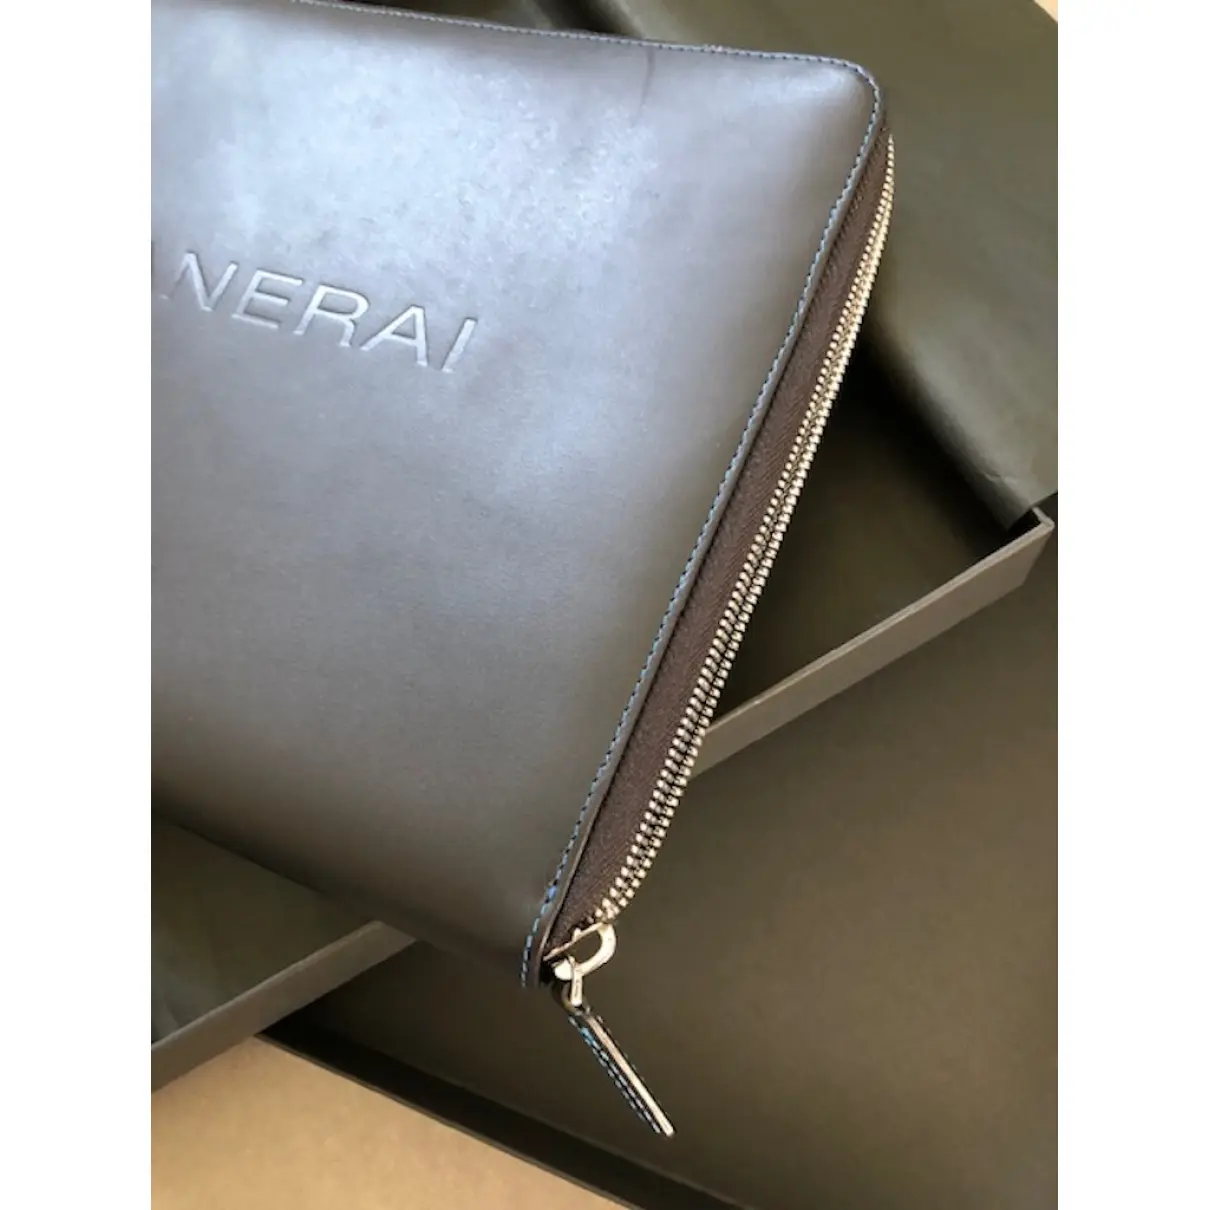 Leather ipad case Panerai